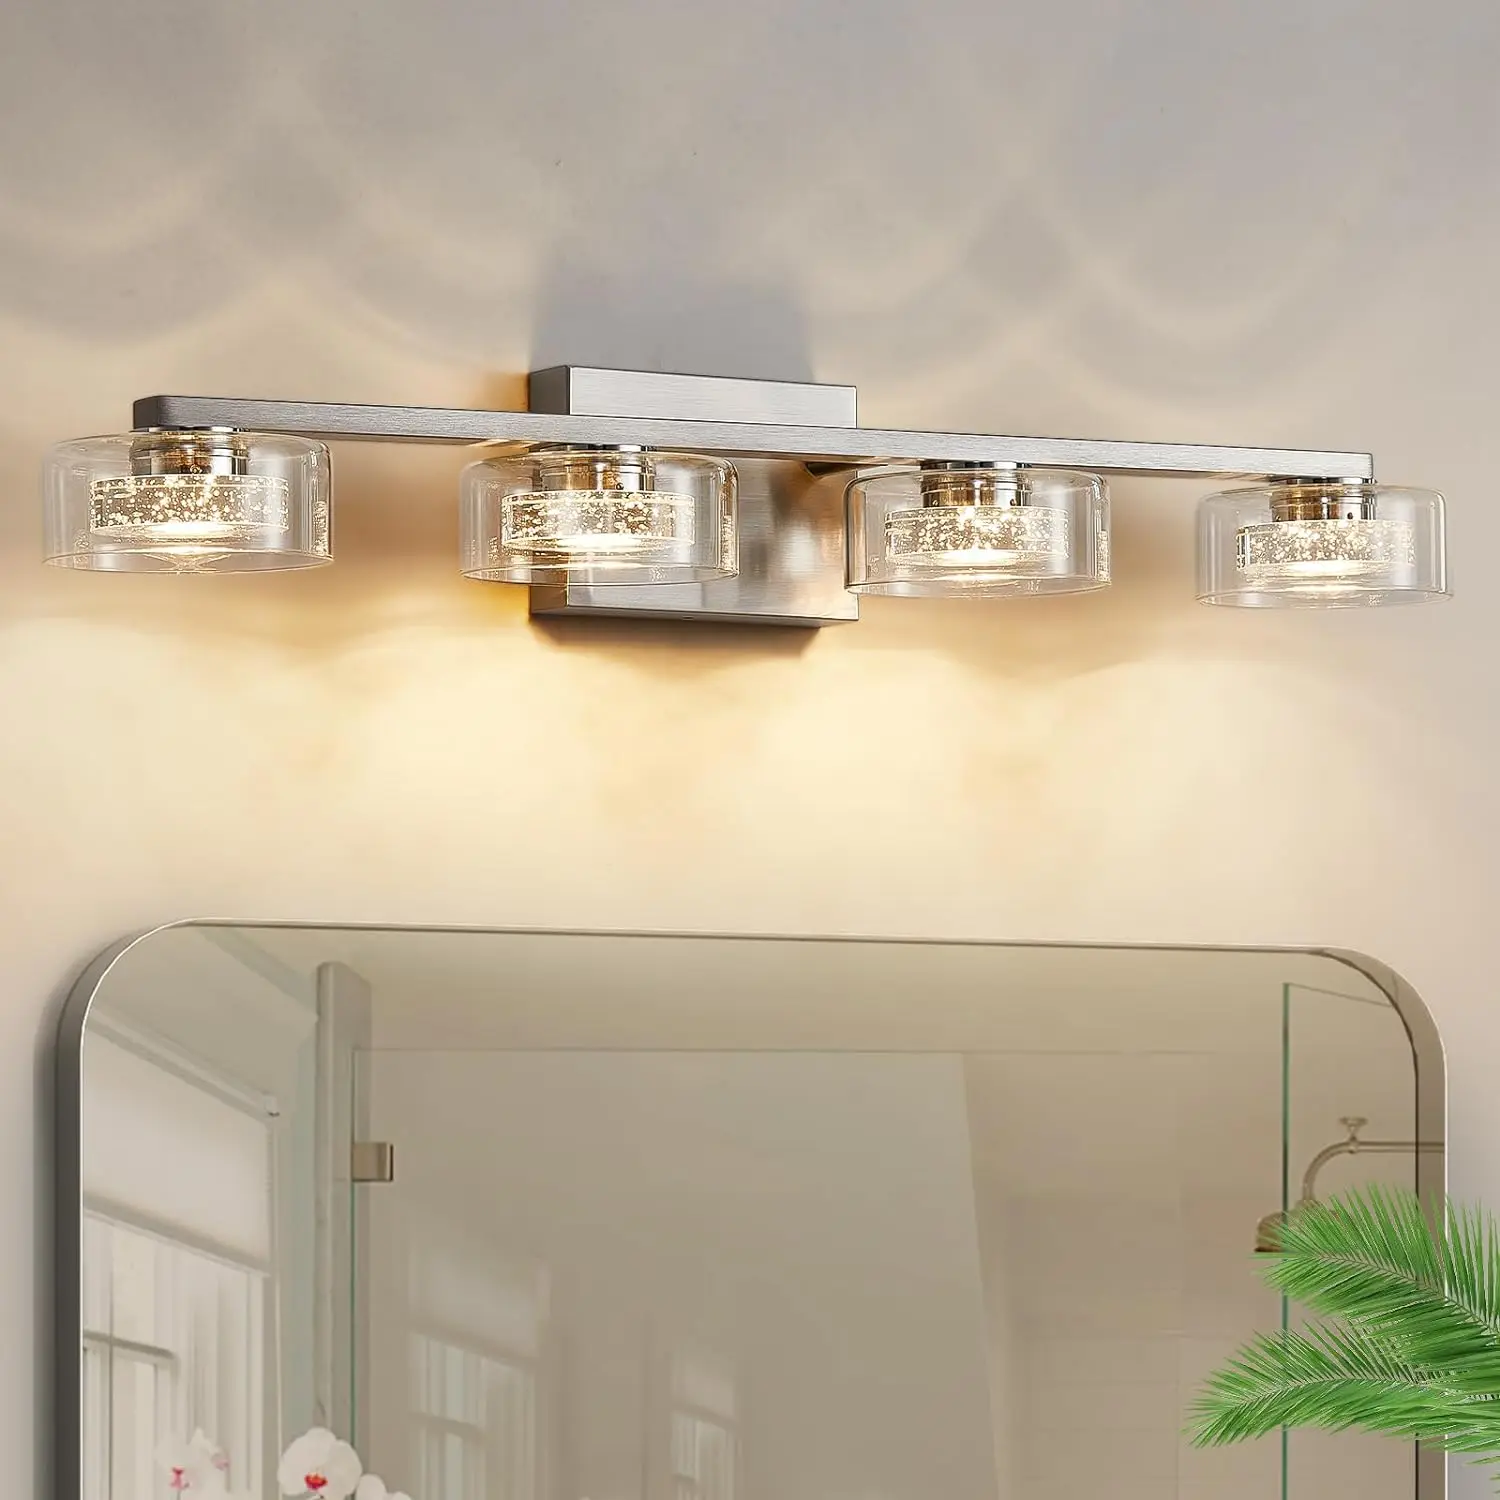 

4 Light Bathroom Vanity Over Mirror, Modern Crystal Brushed Nickel Vanity Lights with Clear Glass Shade for Bedroom Living Room